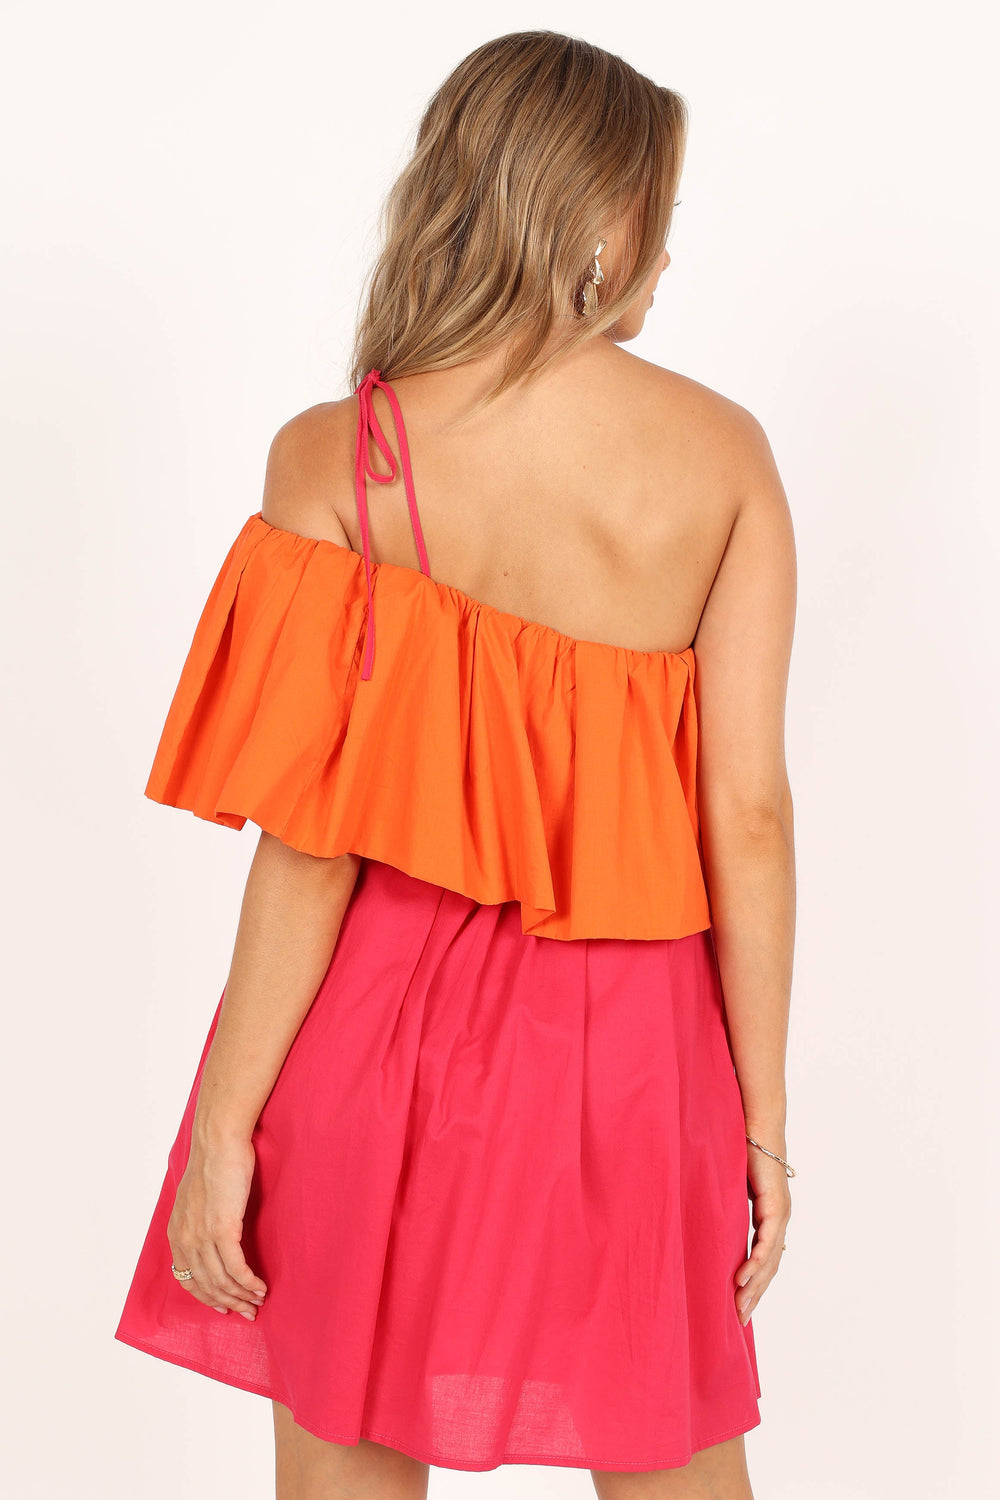 Maeva One Shoulder Mini USA Pup - Petal & Pink/Orange Dress 